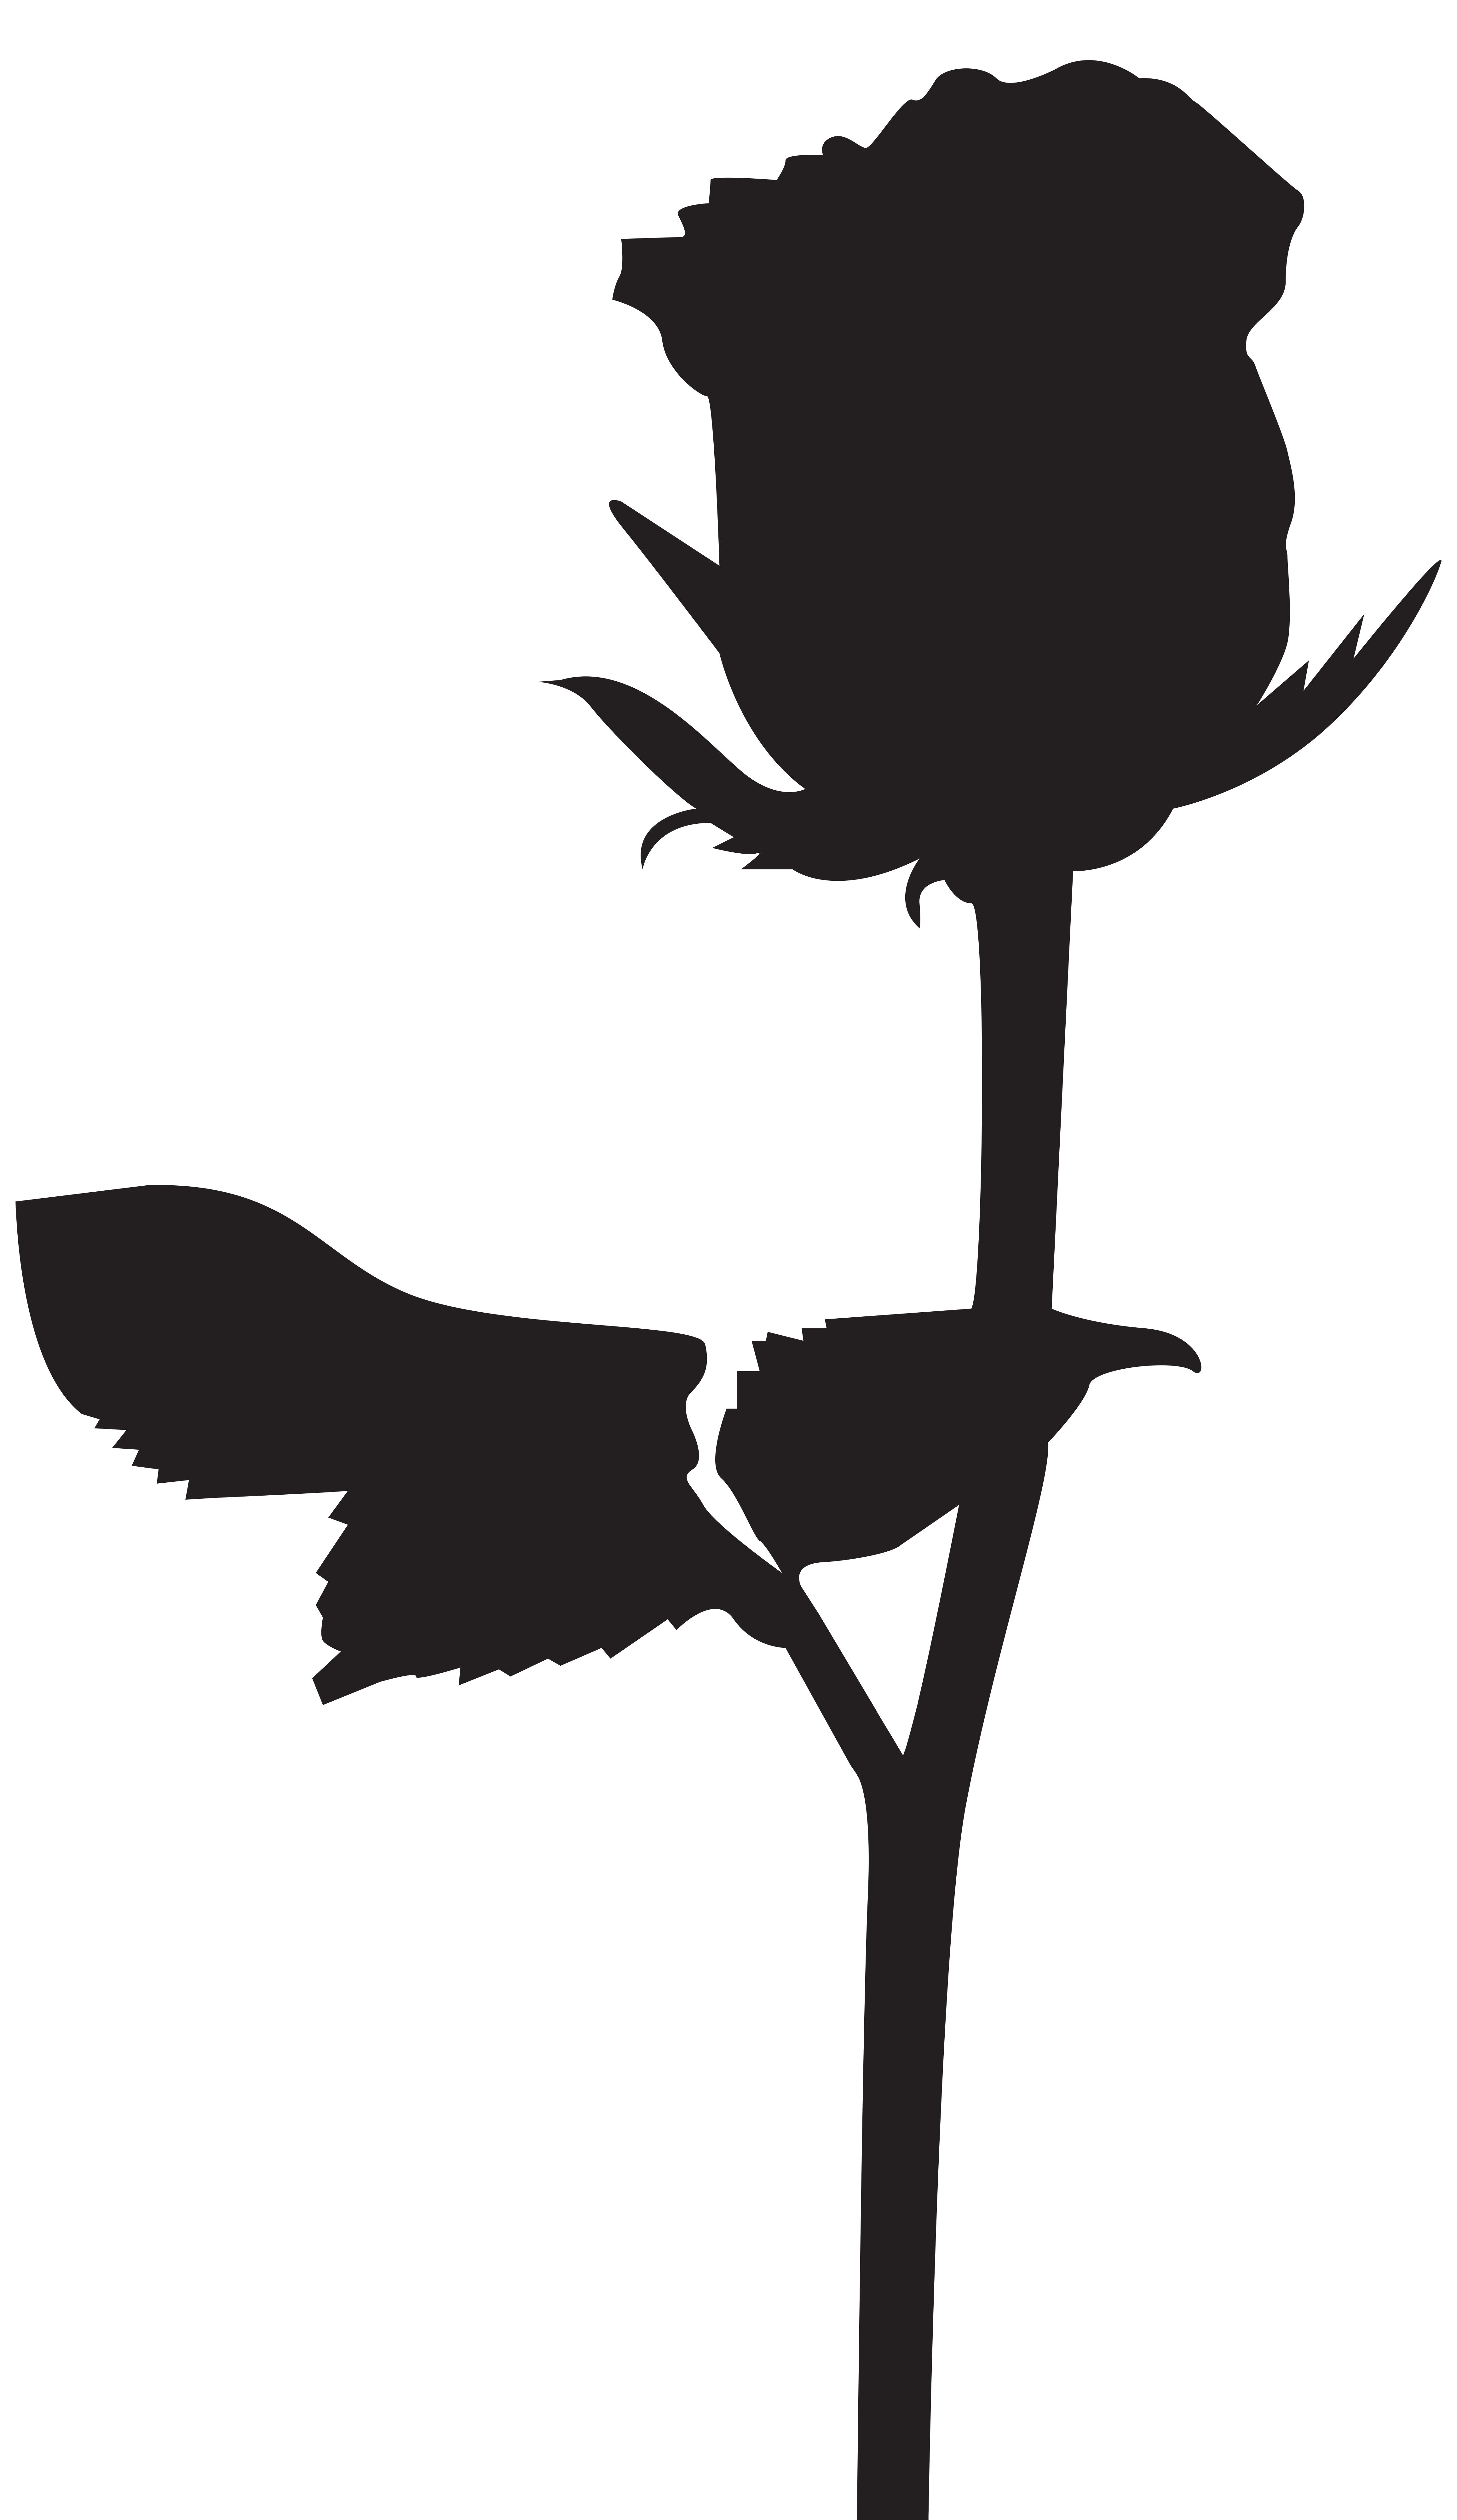 Rose Silhouette Clip Art at GetDrawings | Free download